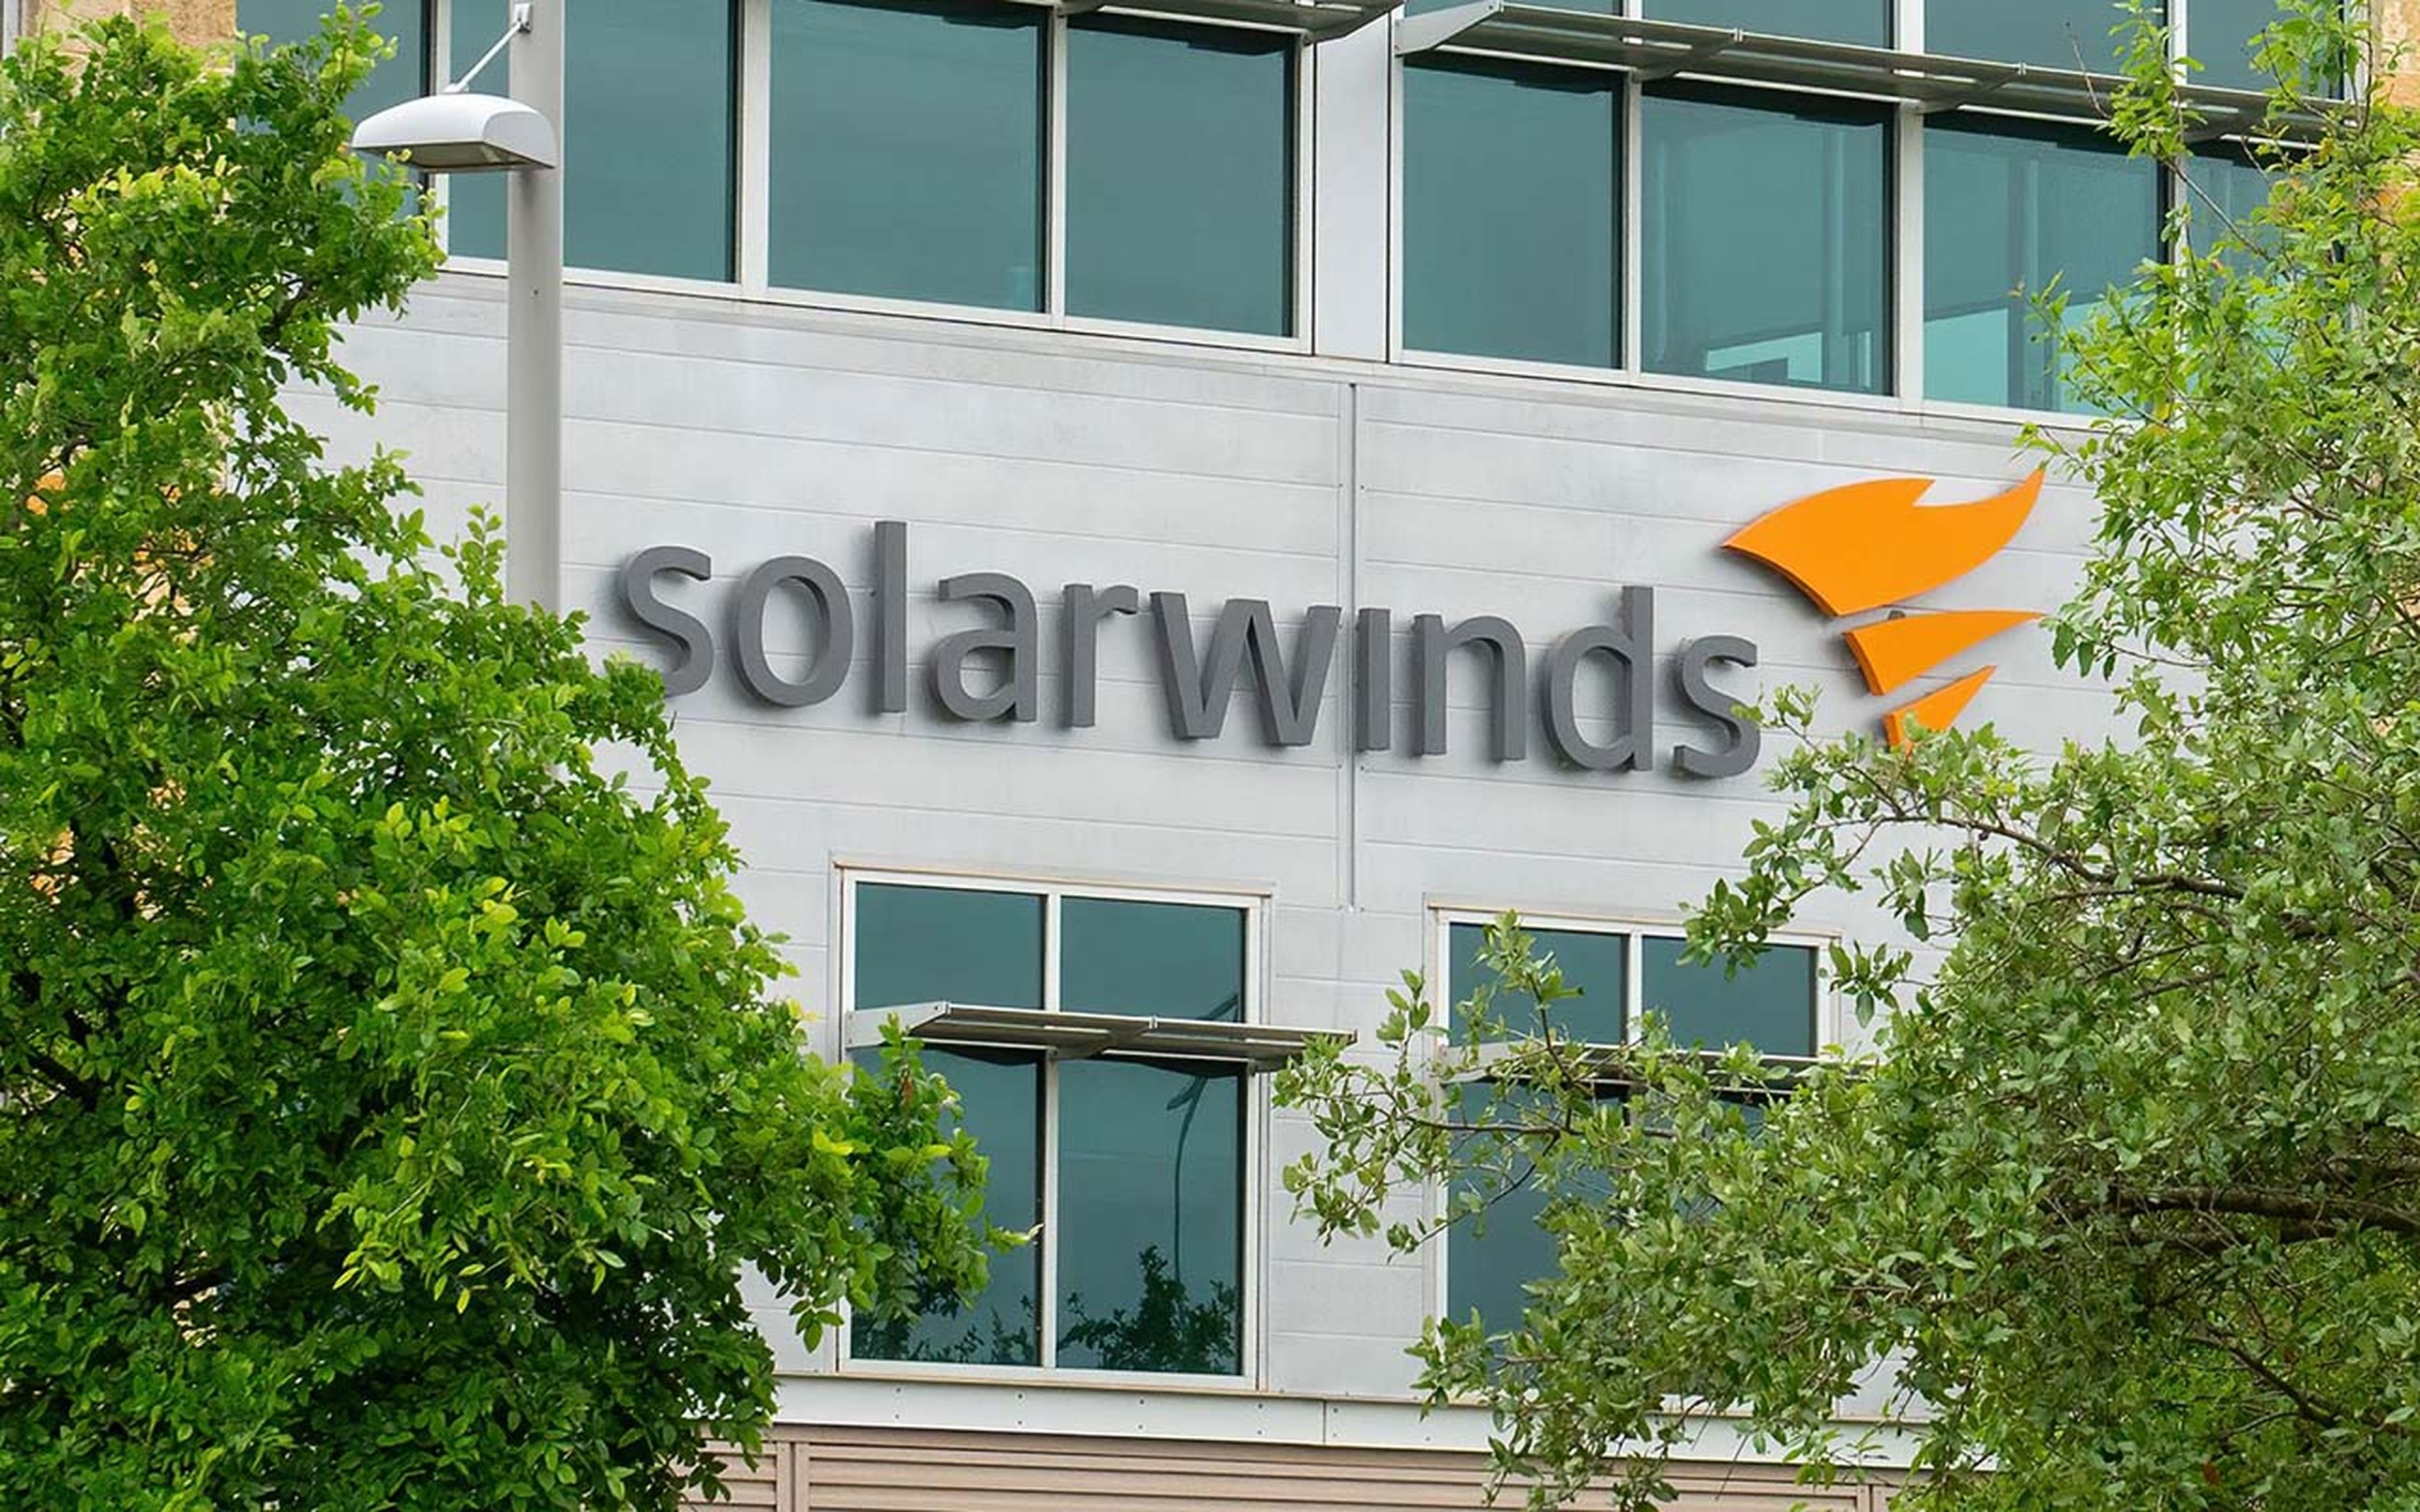 SolarWinds headquarters